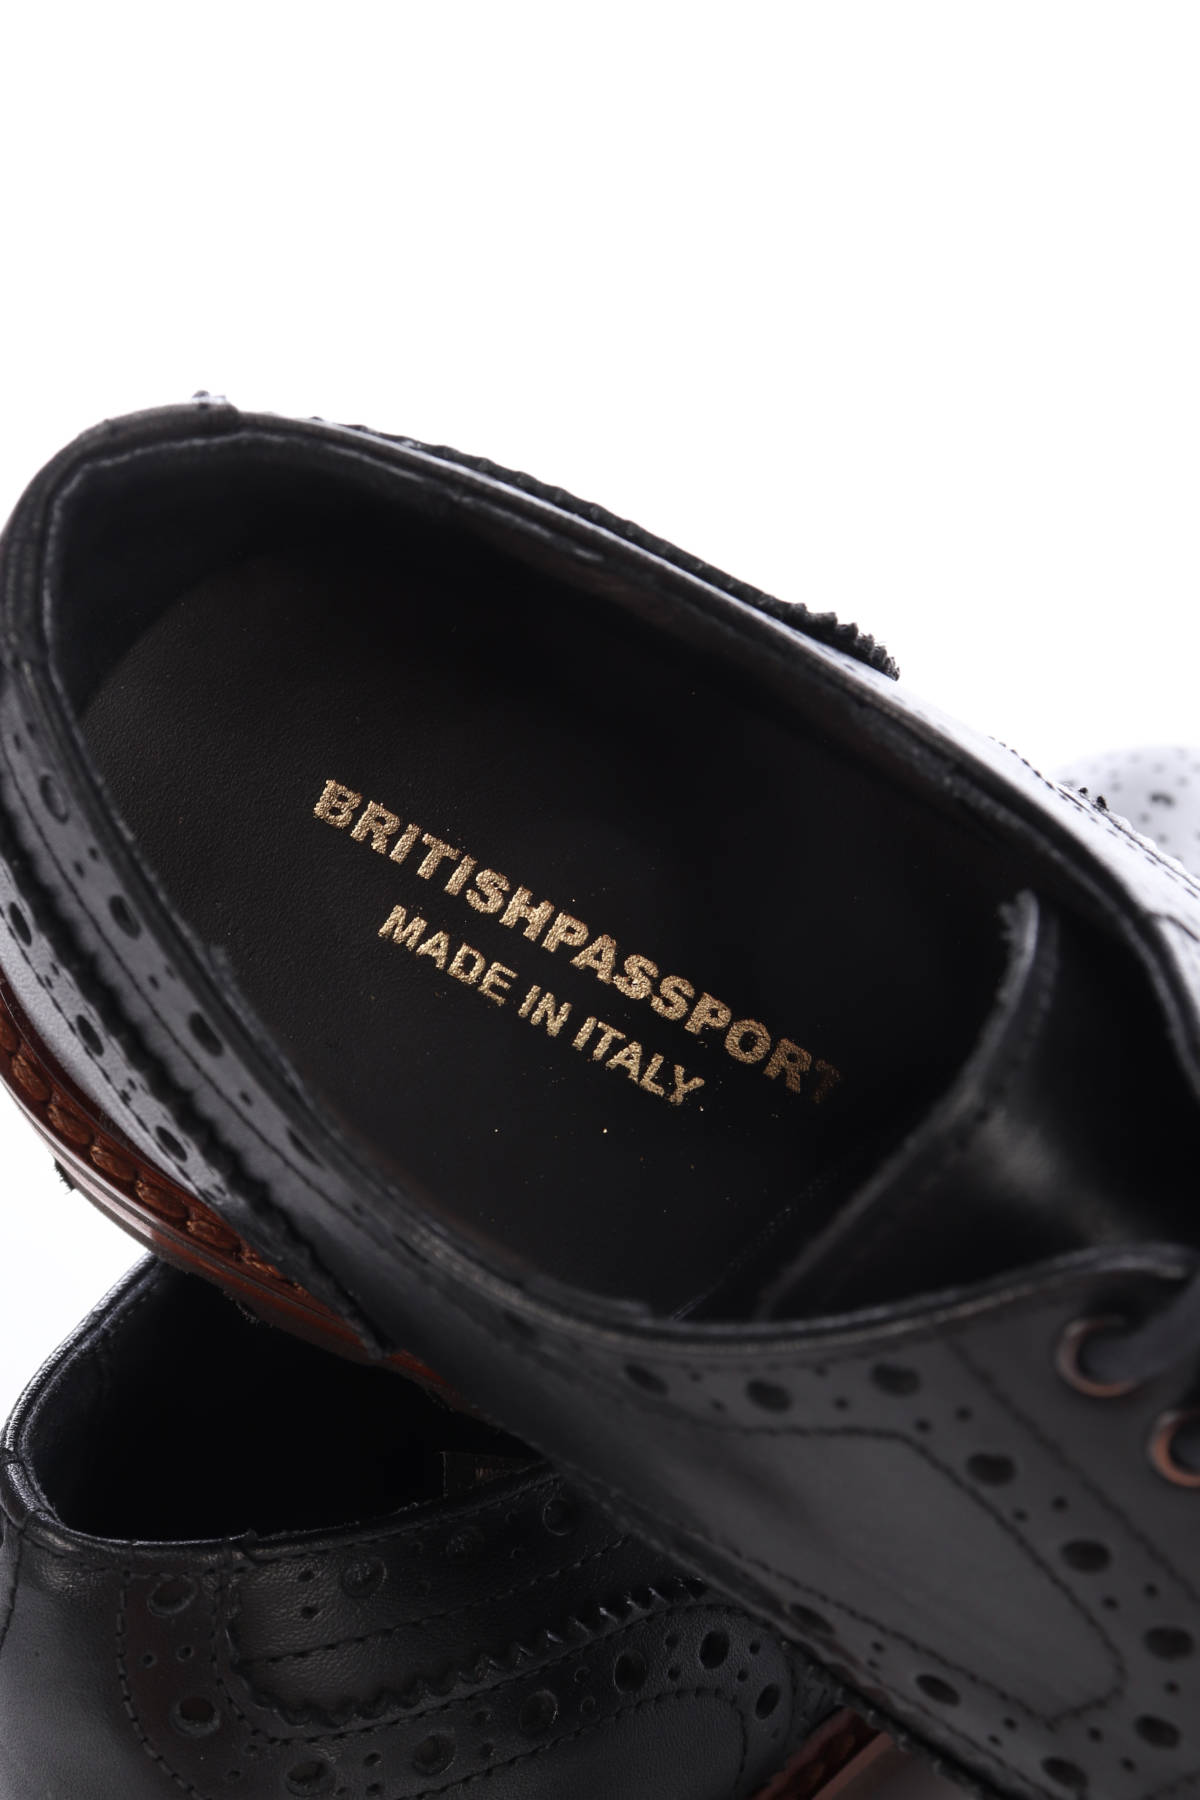 Официални обувки BRITISH PASSPORT4